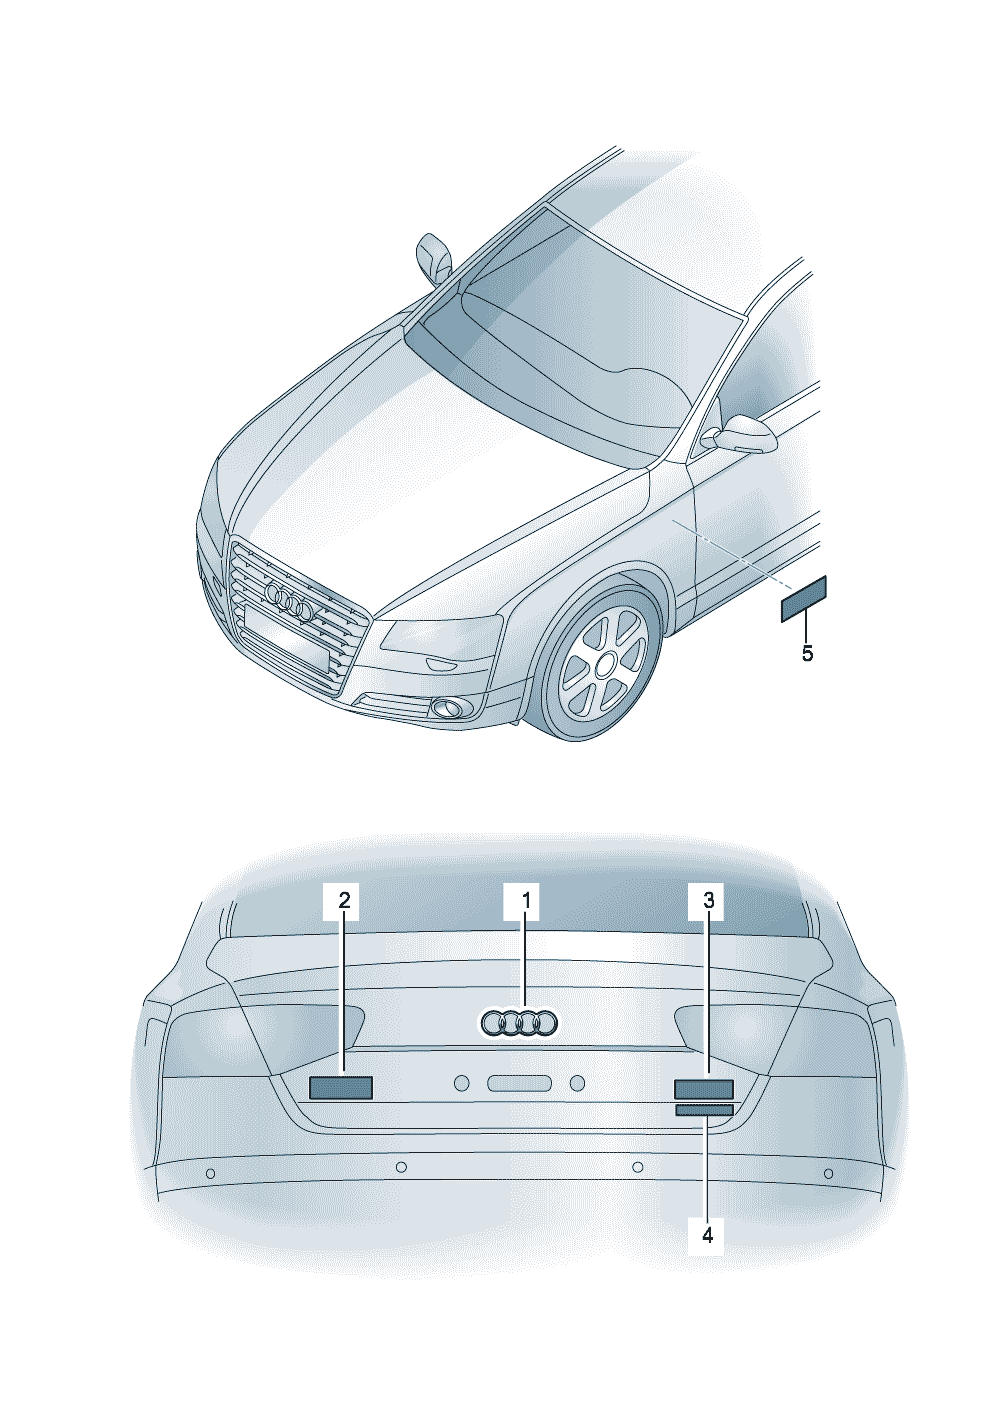 inscriptions/lettering rearside - Audi A8 - a8